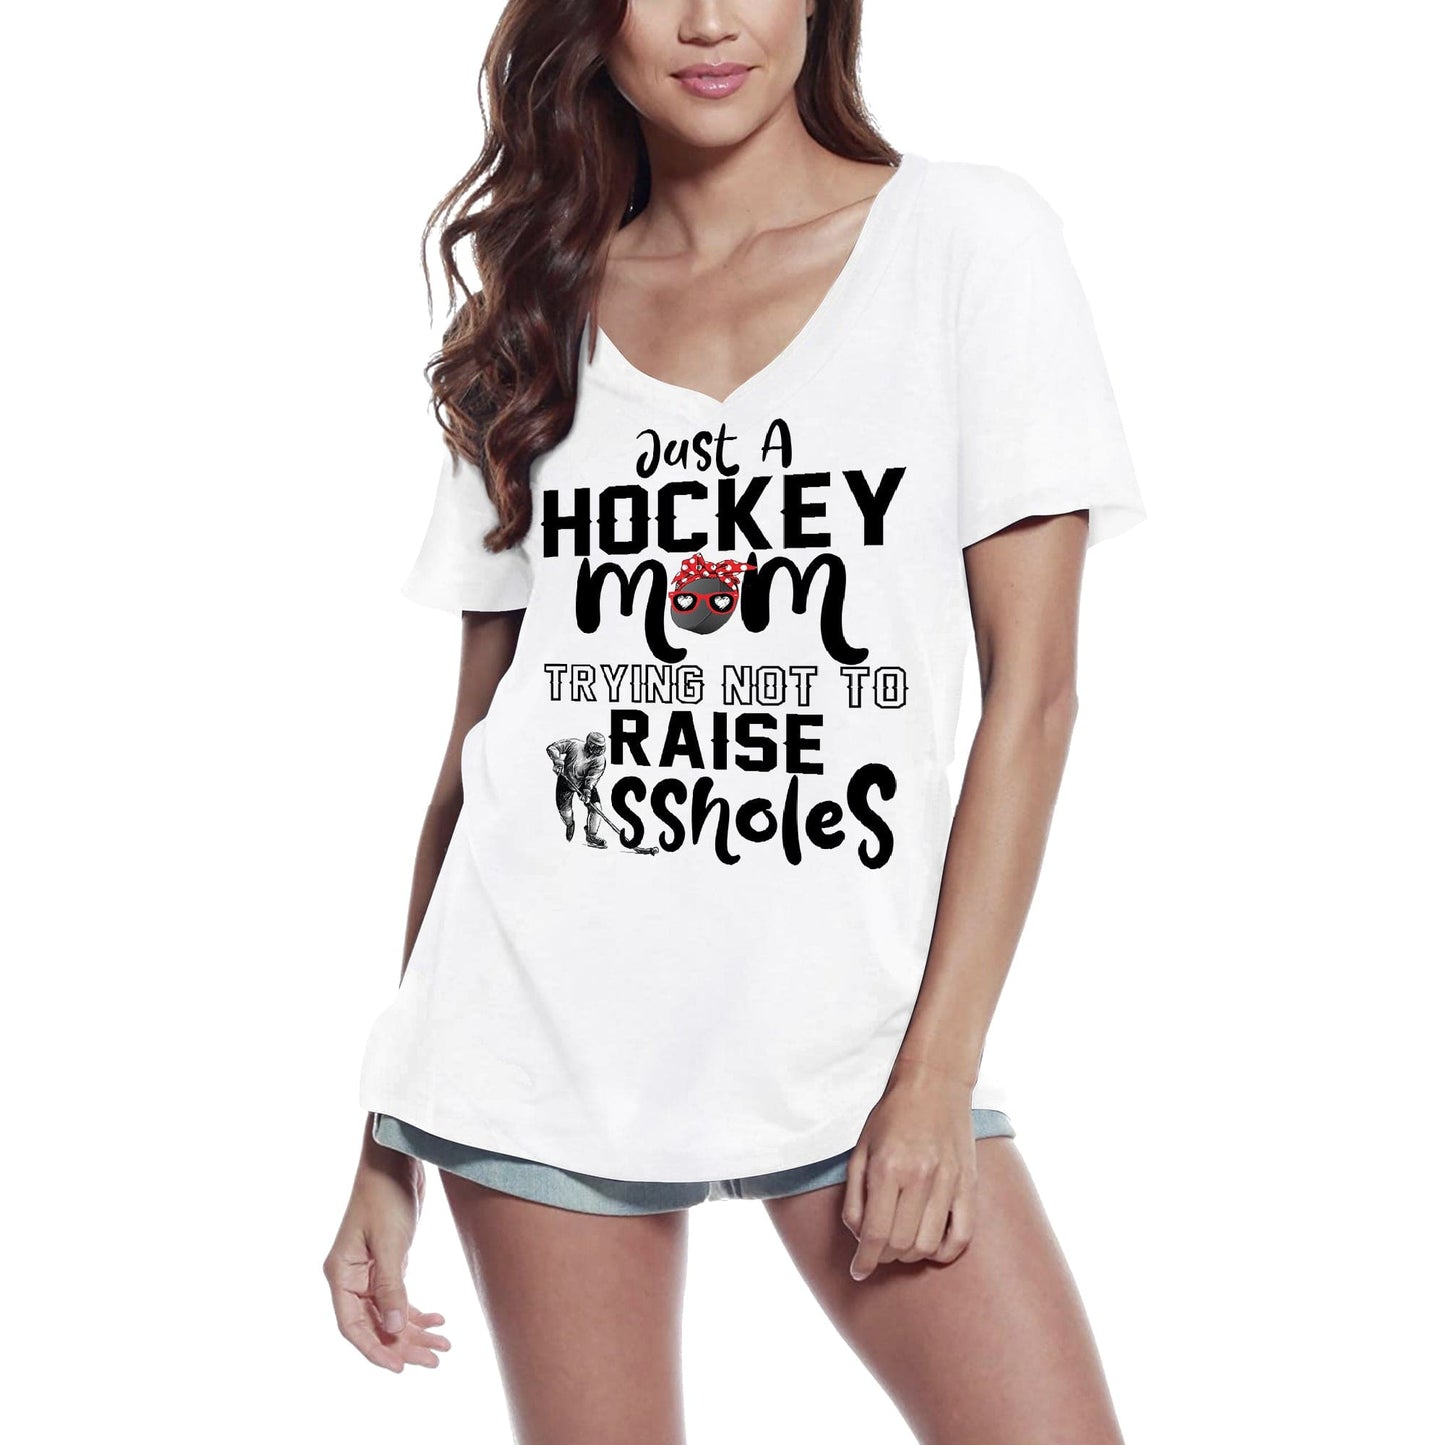 ULTRABASIC Women's T-Shirt Just a Hockey Mom - Funny Saying Mother Tee Shirt